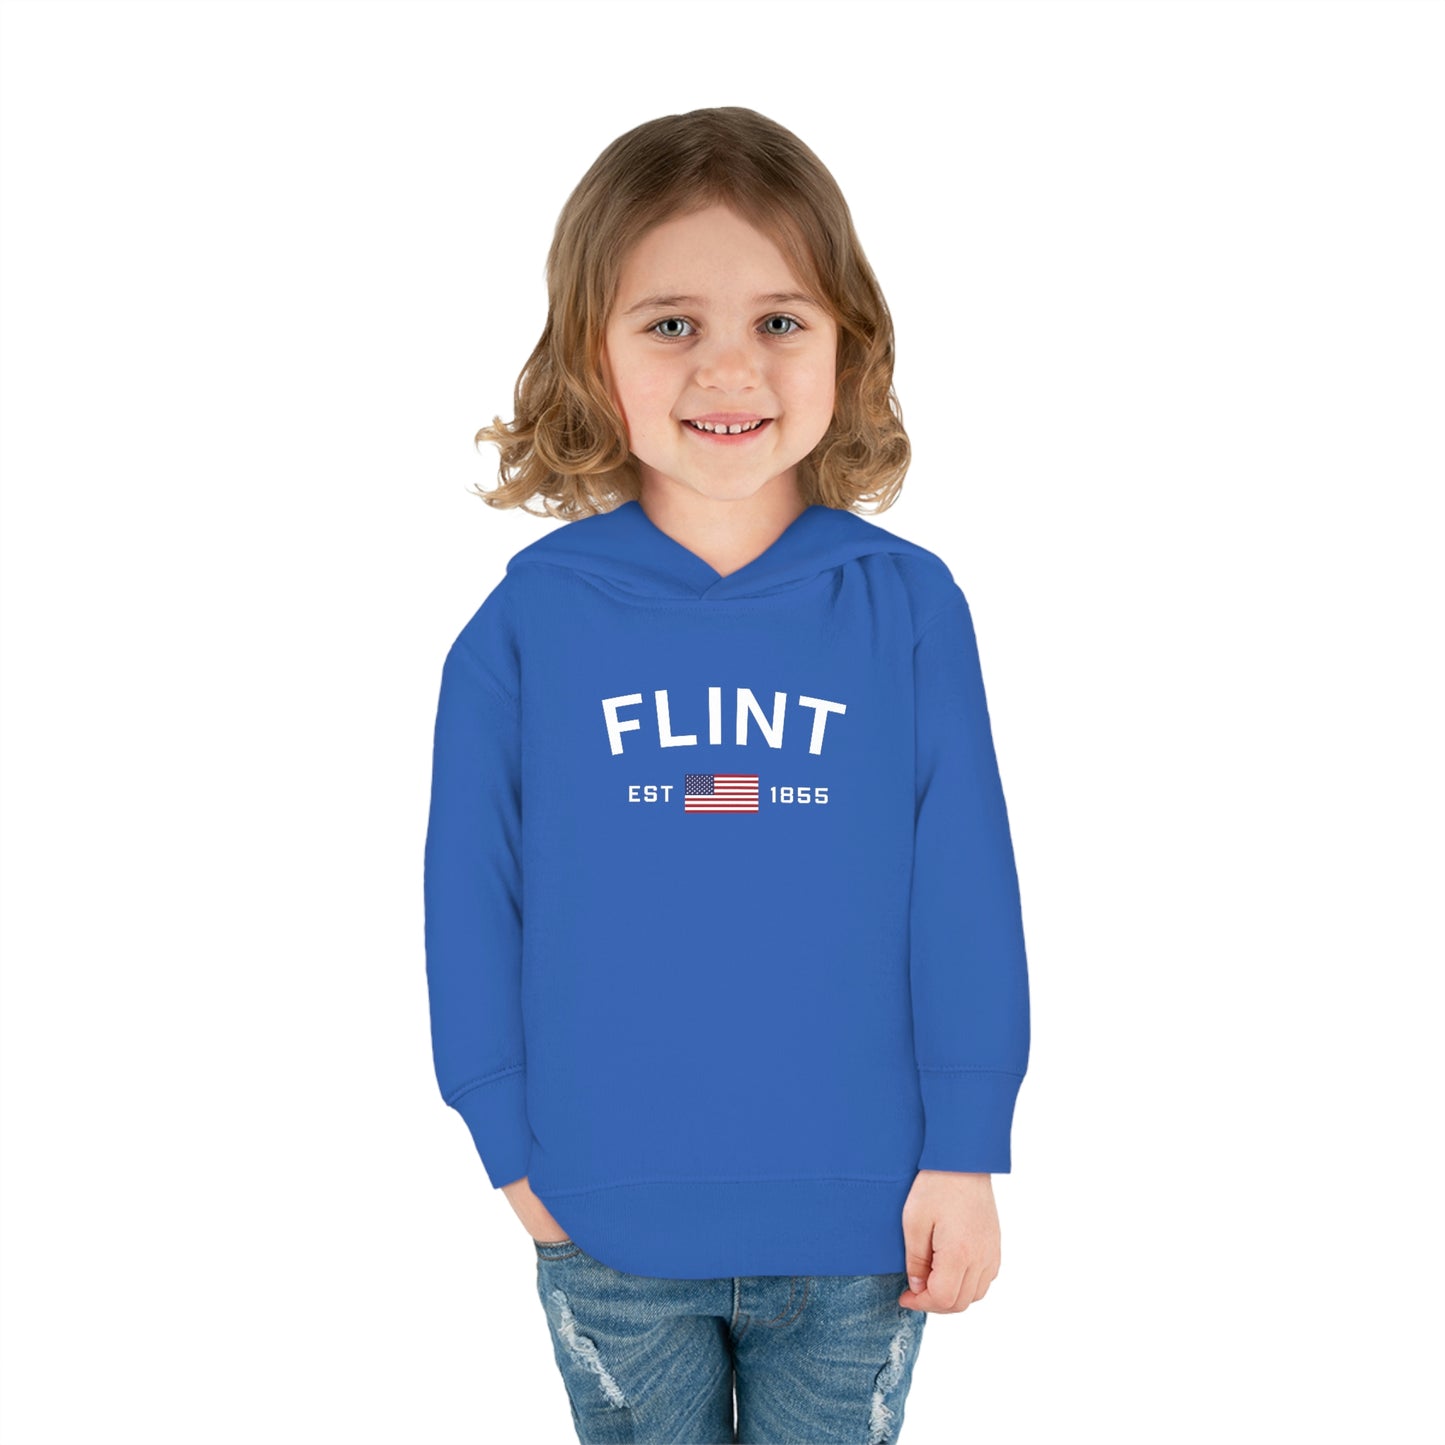 'Flint EST 1855' Hoodie (Whimsical Sans Font) | Unisex Toddler